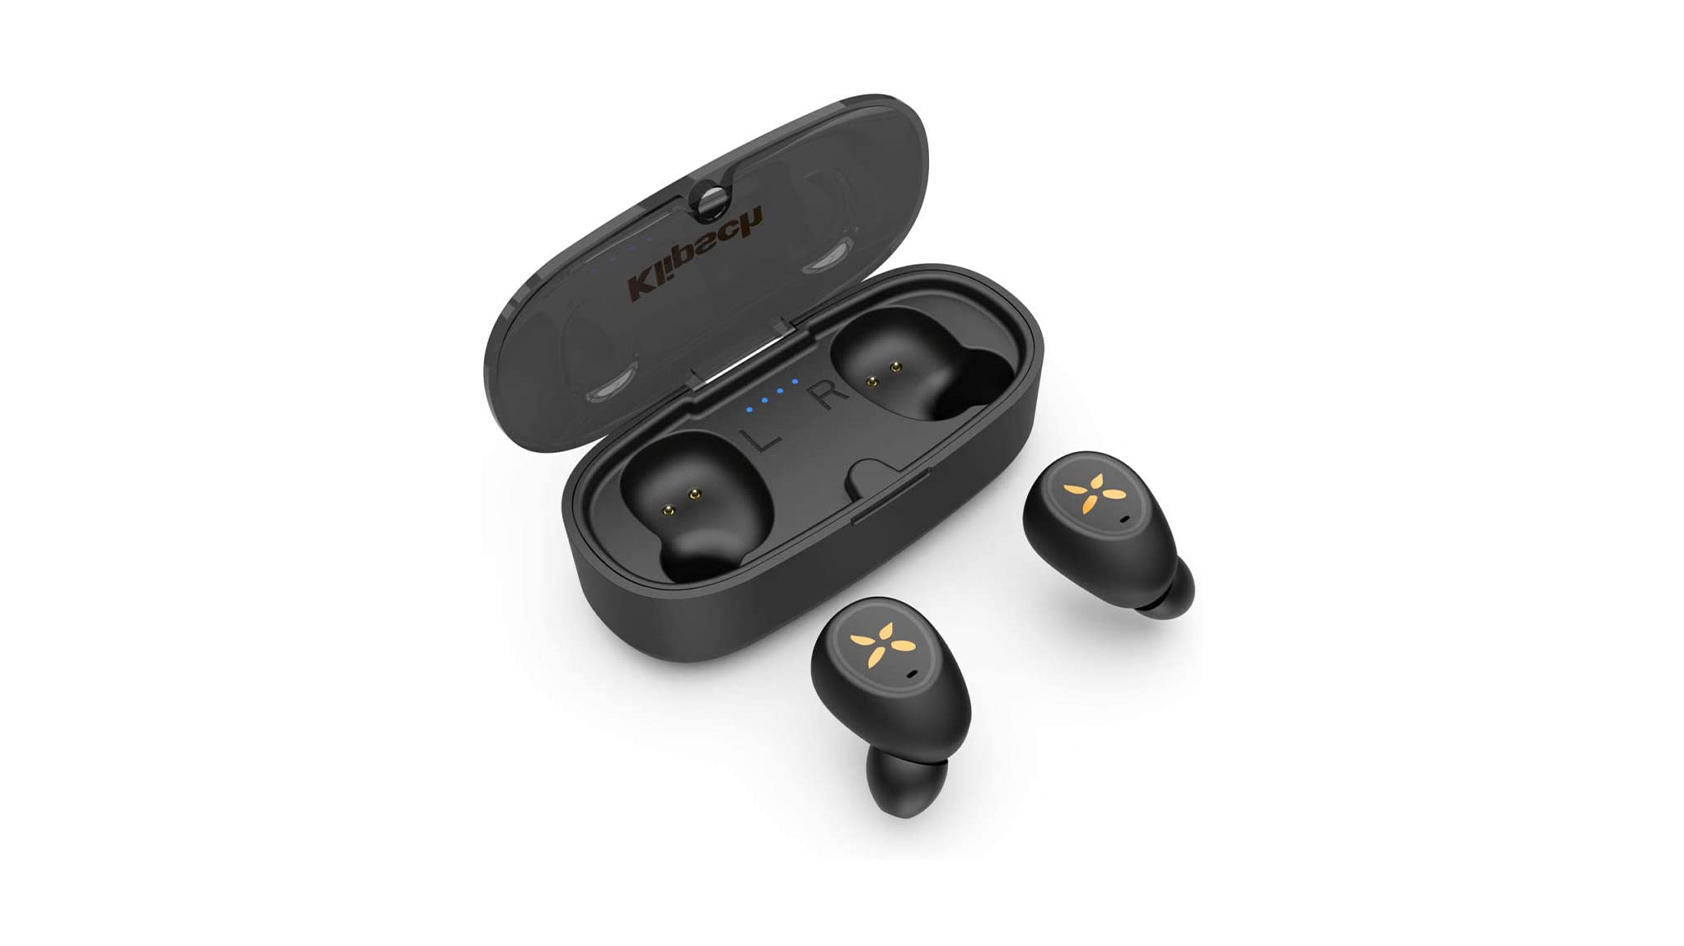 The Klipsch S1 True Wireless earbuds in black against a white background.